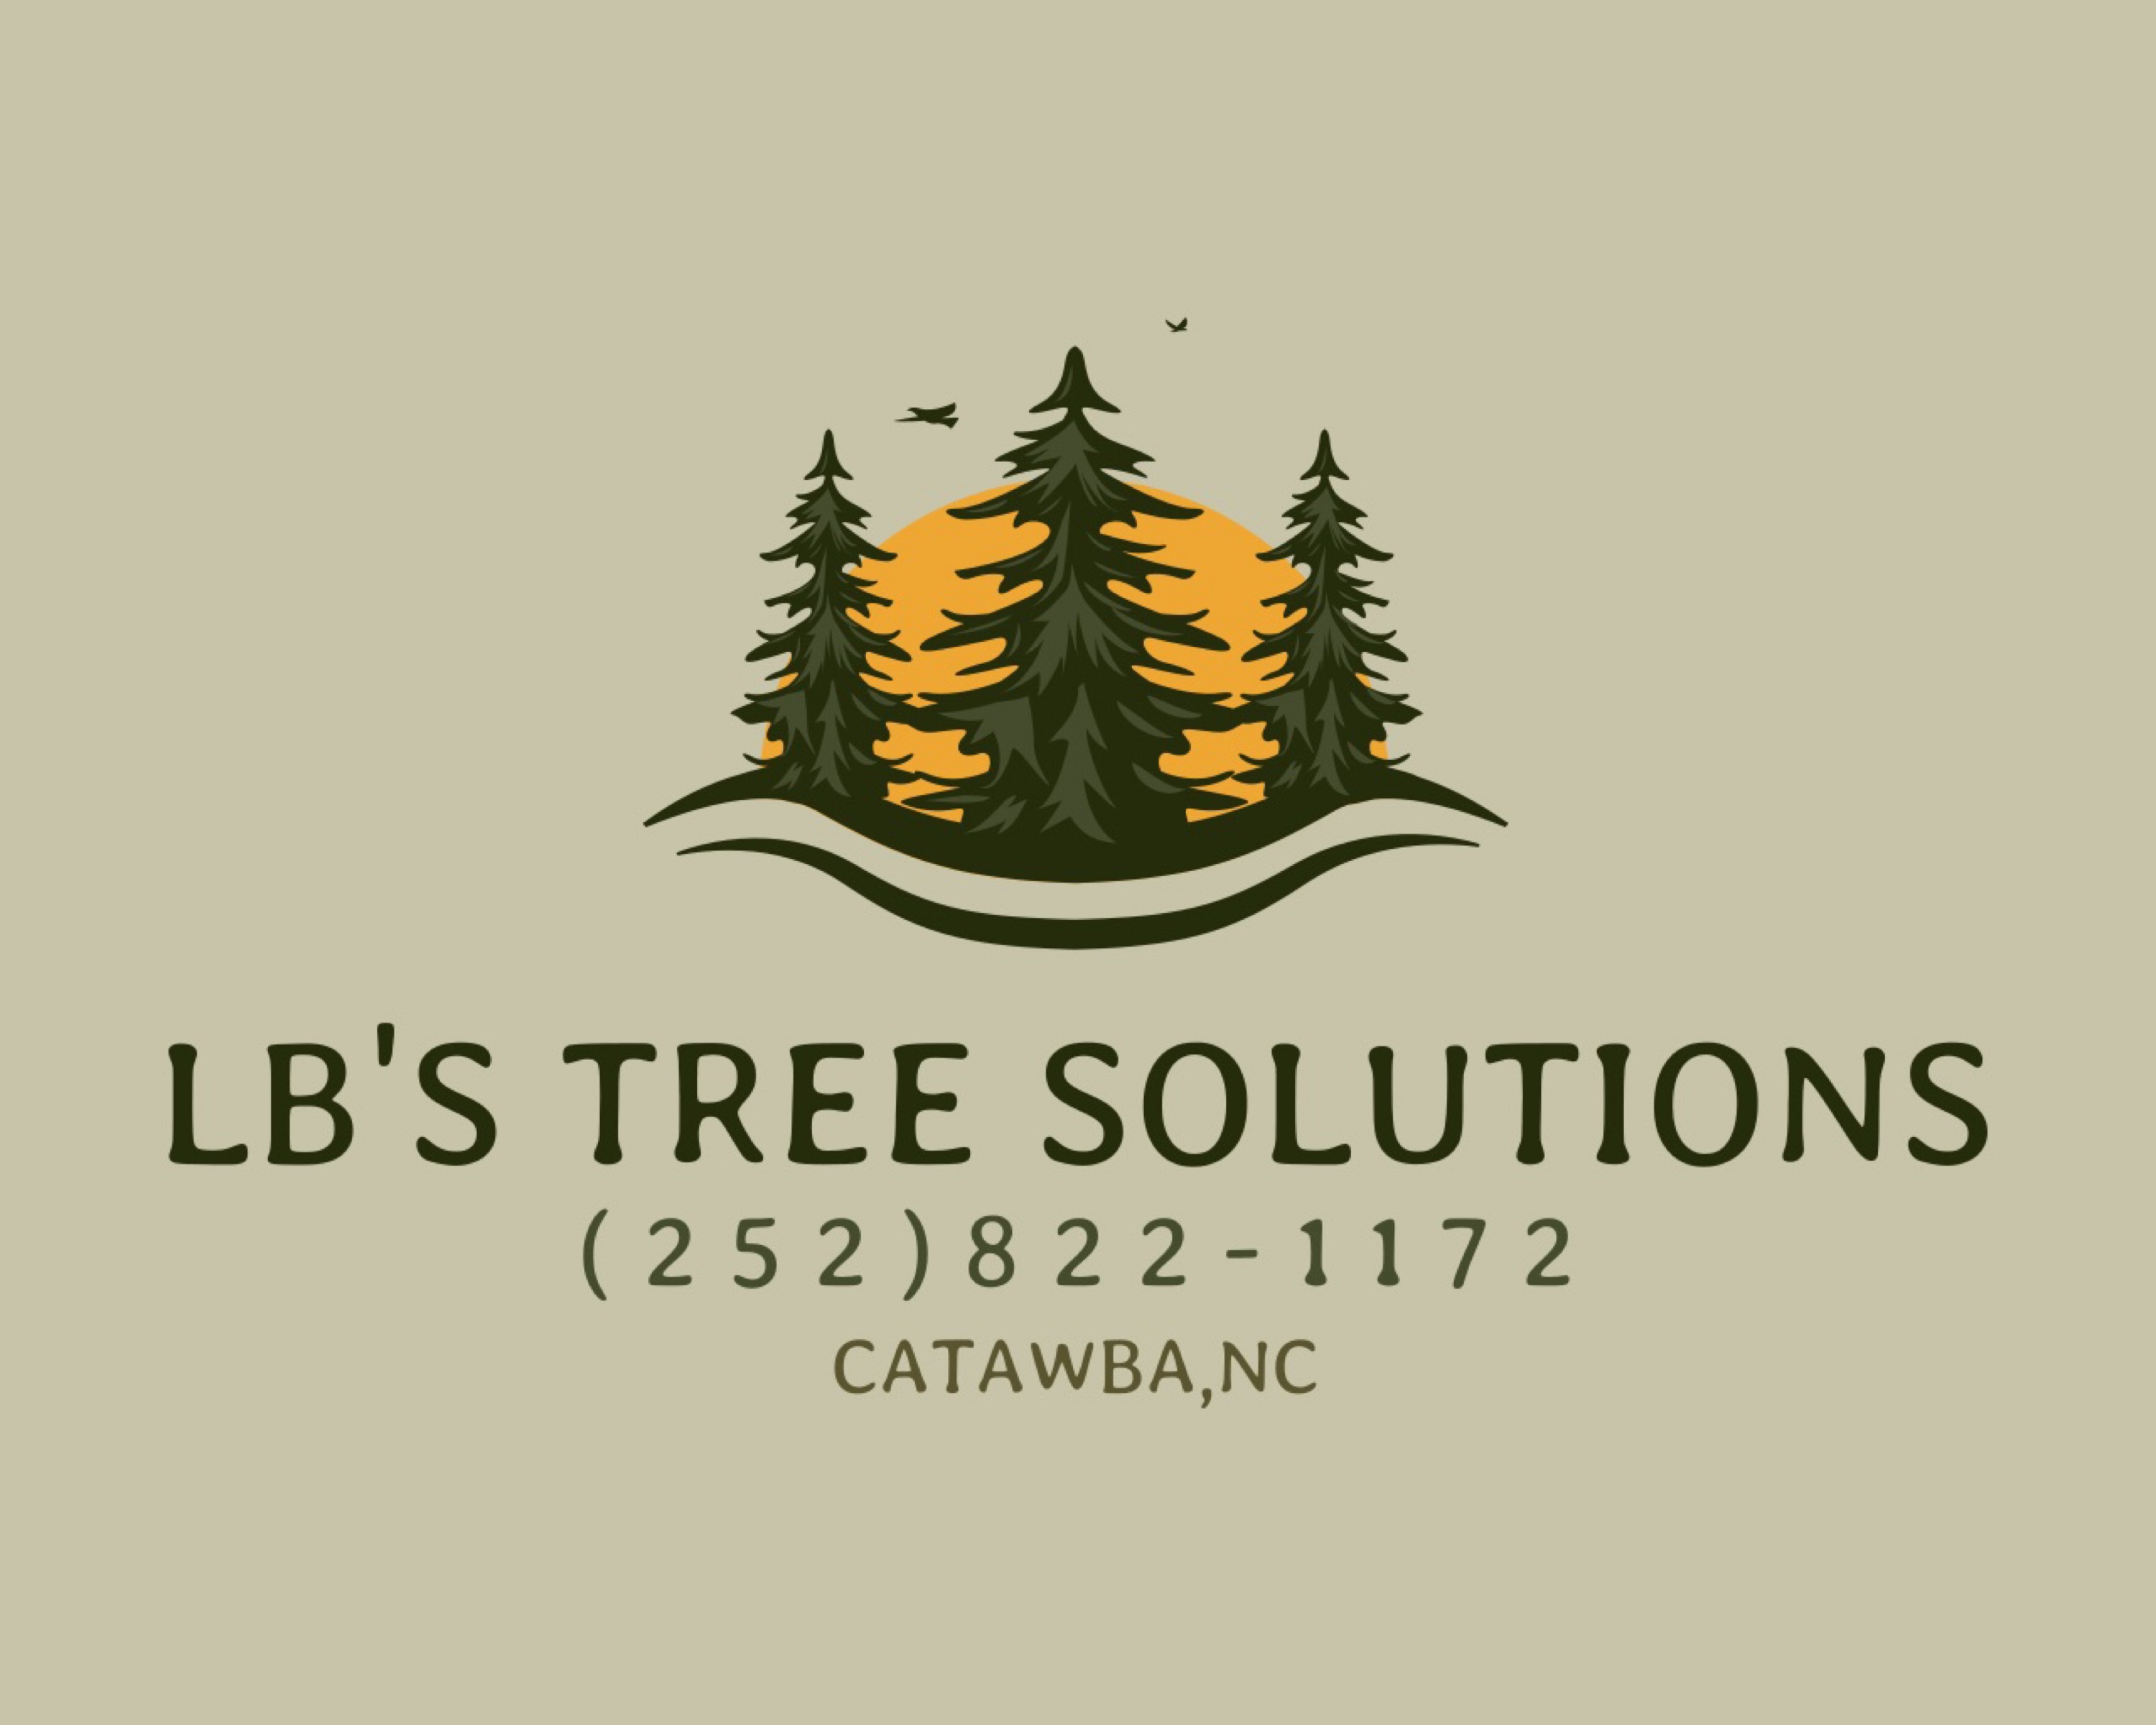 LB's Tree Solutions Logo